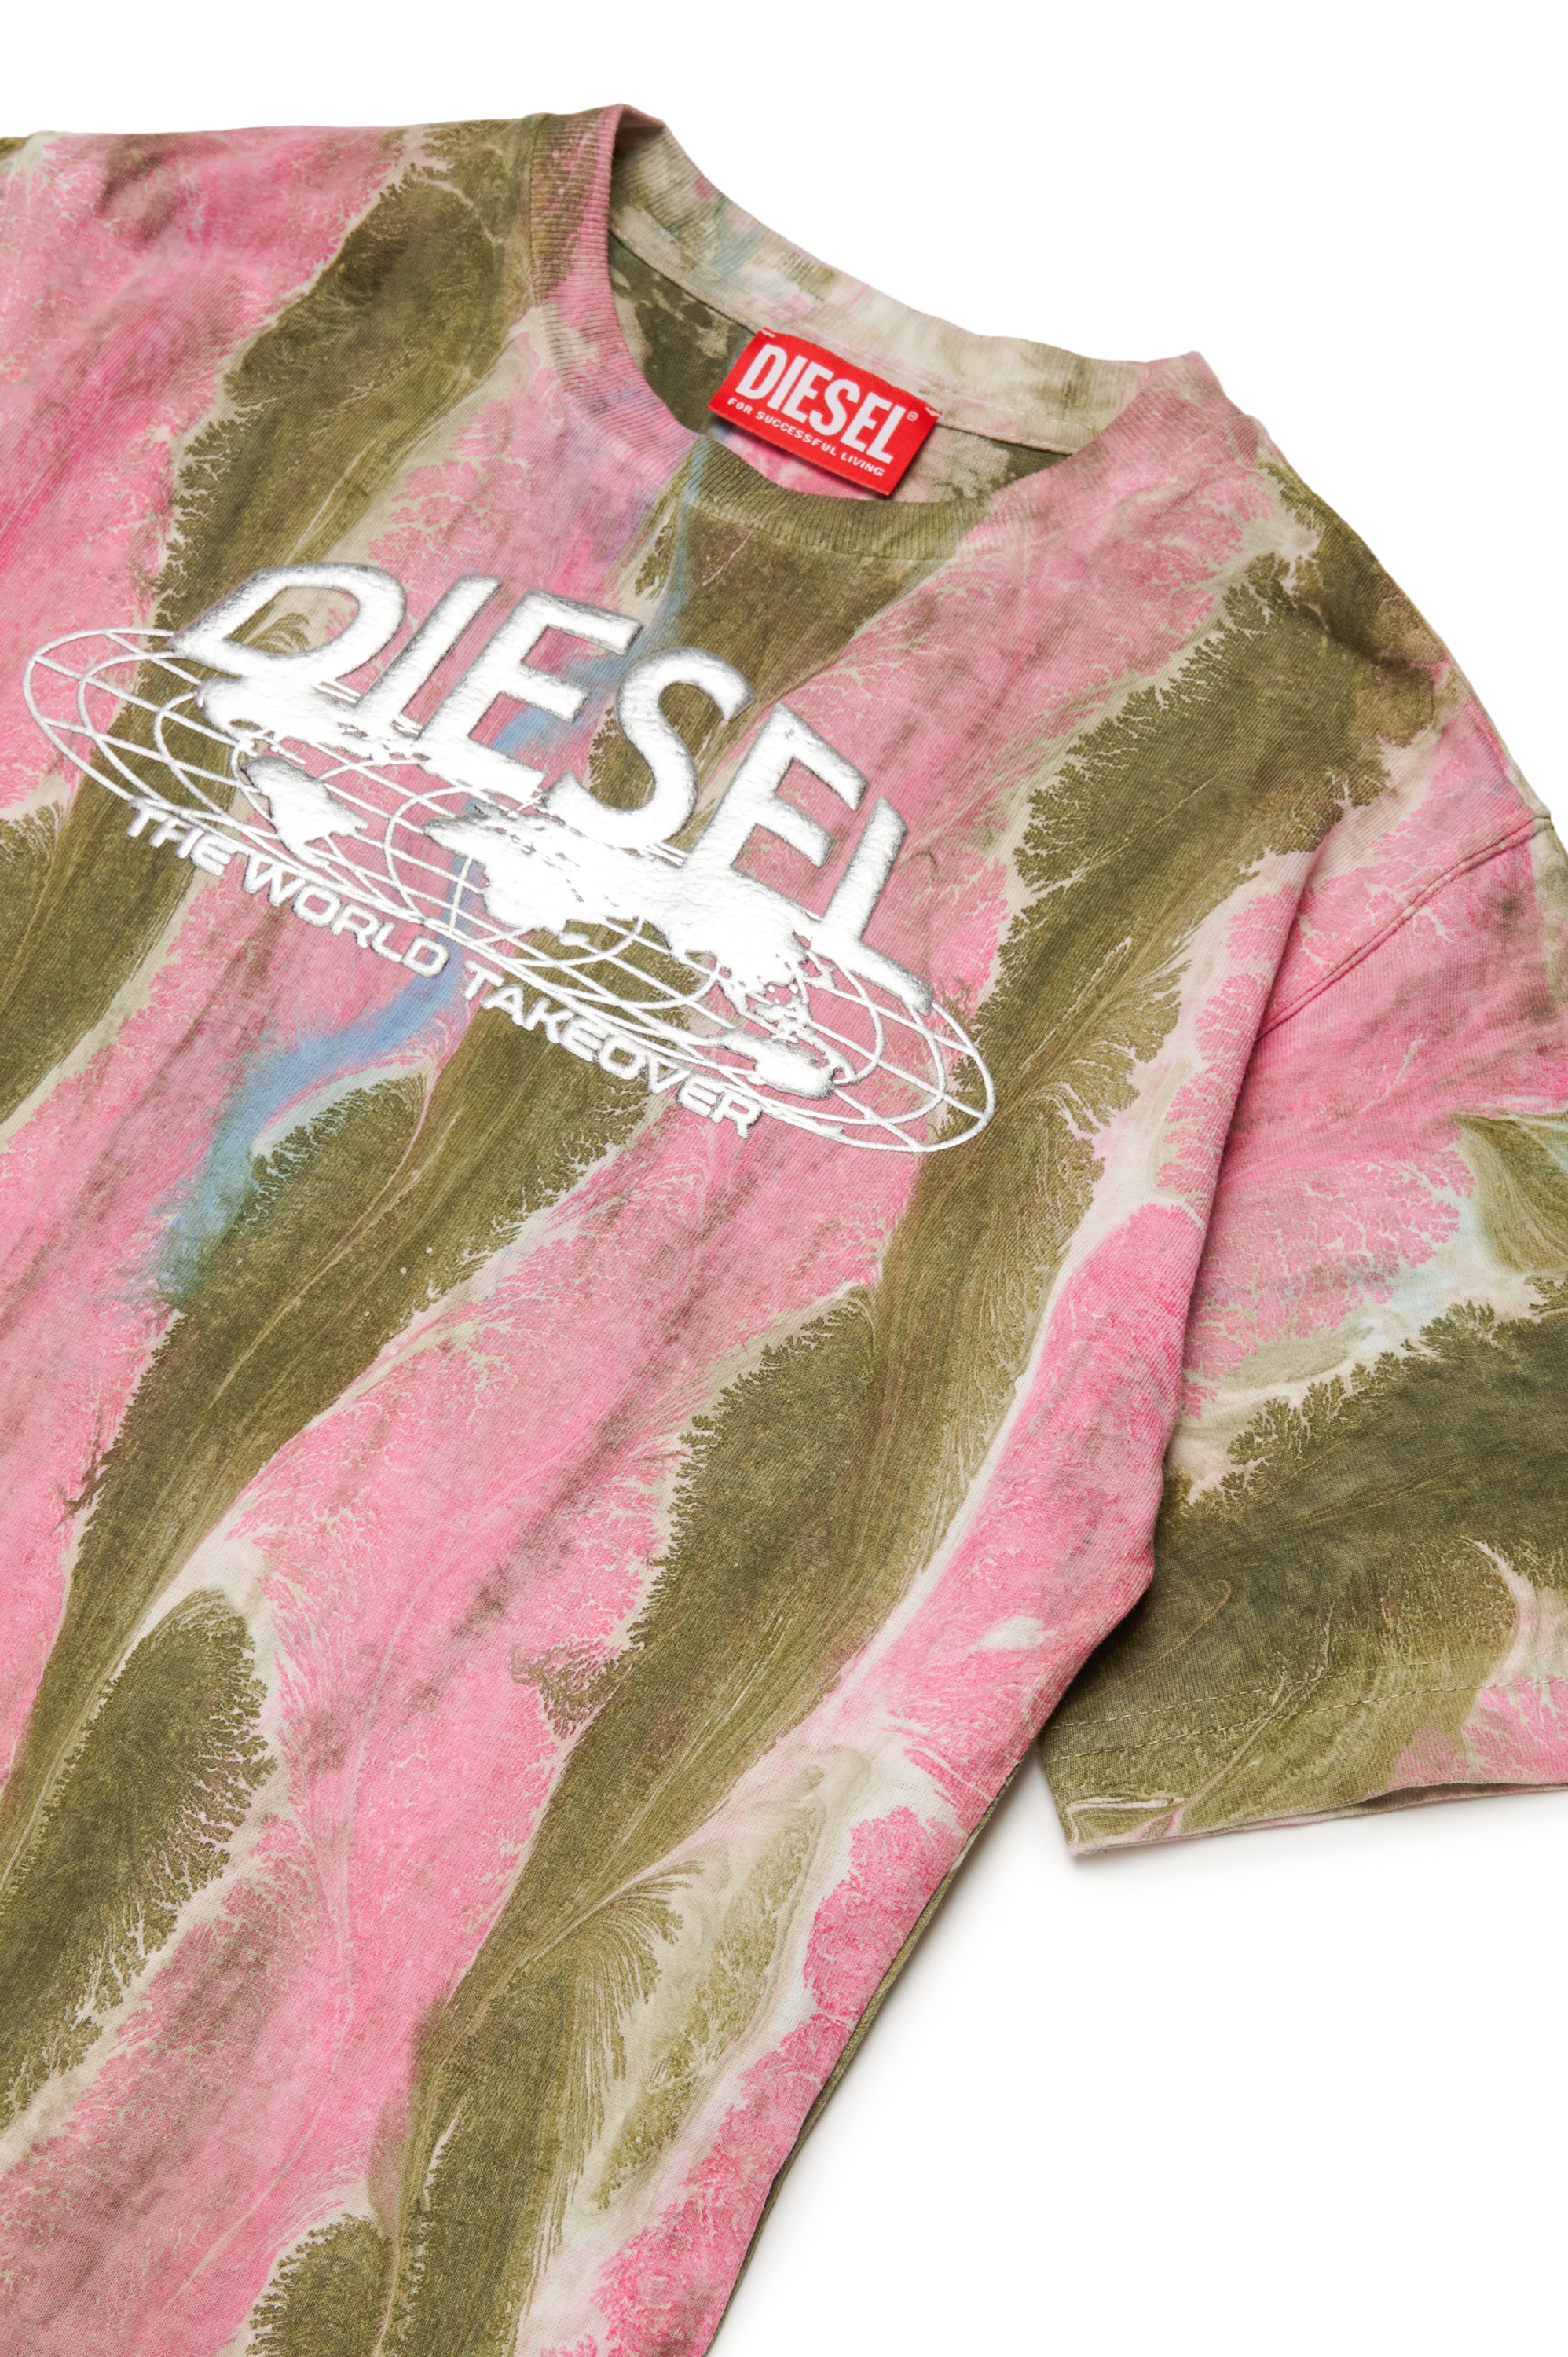 Diesel - TWASHL2 OVER, Unisex T-shirt with wavy pattern in マルチカラー - Image 3